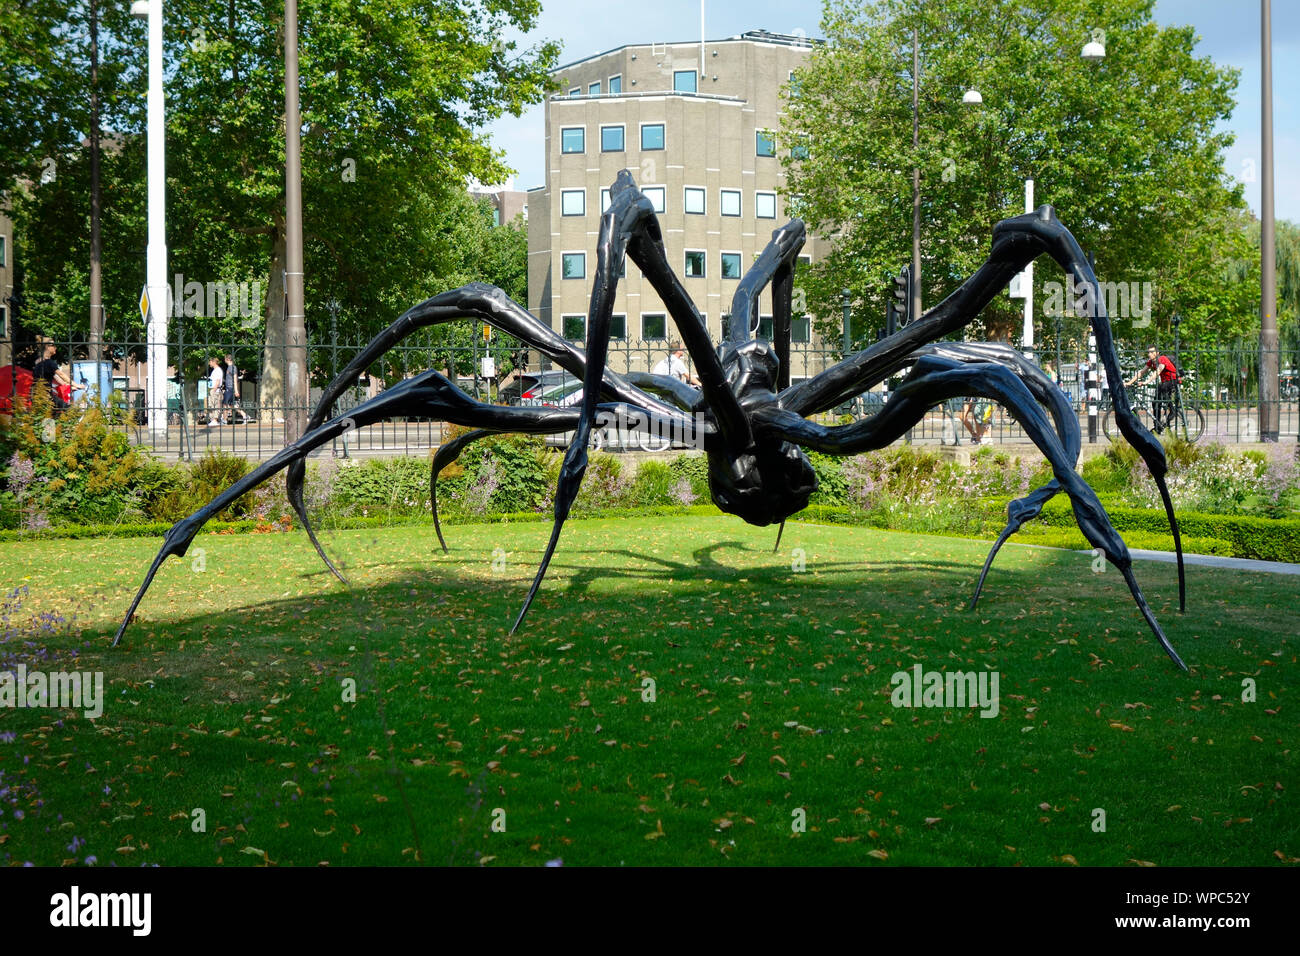 Accovacciato Spider 2003 da French-American artista Louise Bourgeois 1911-2010. Rijksmuseum Gardens, Amsterdam, Paesi Bassi. Foto Stock